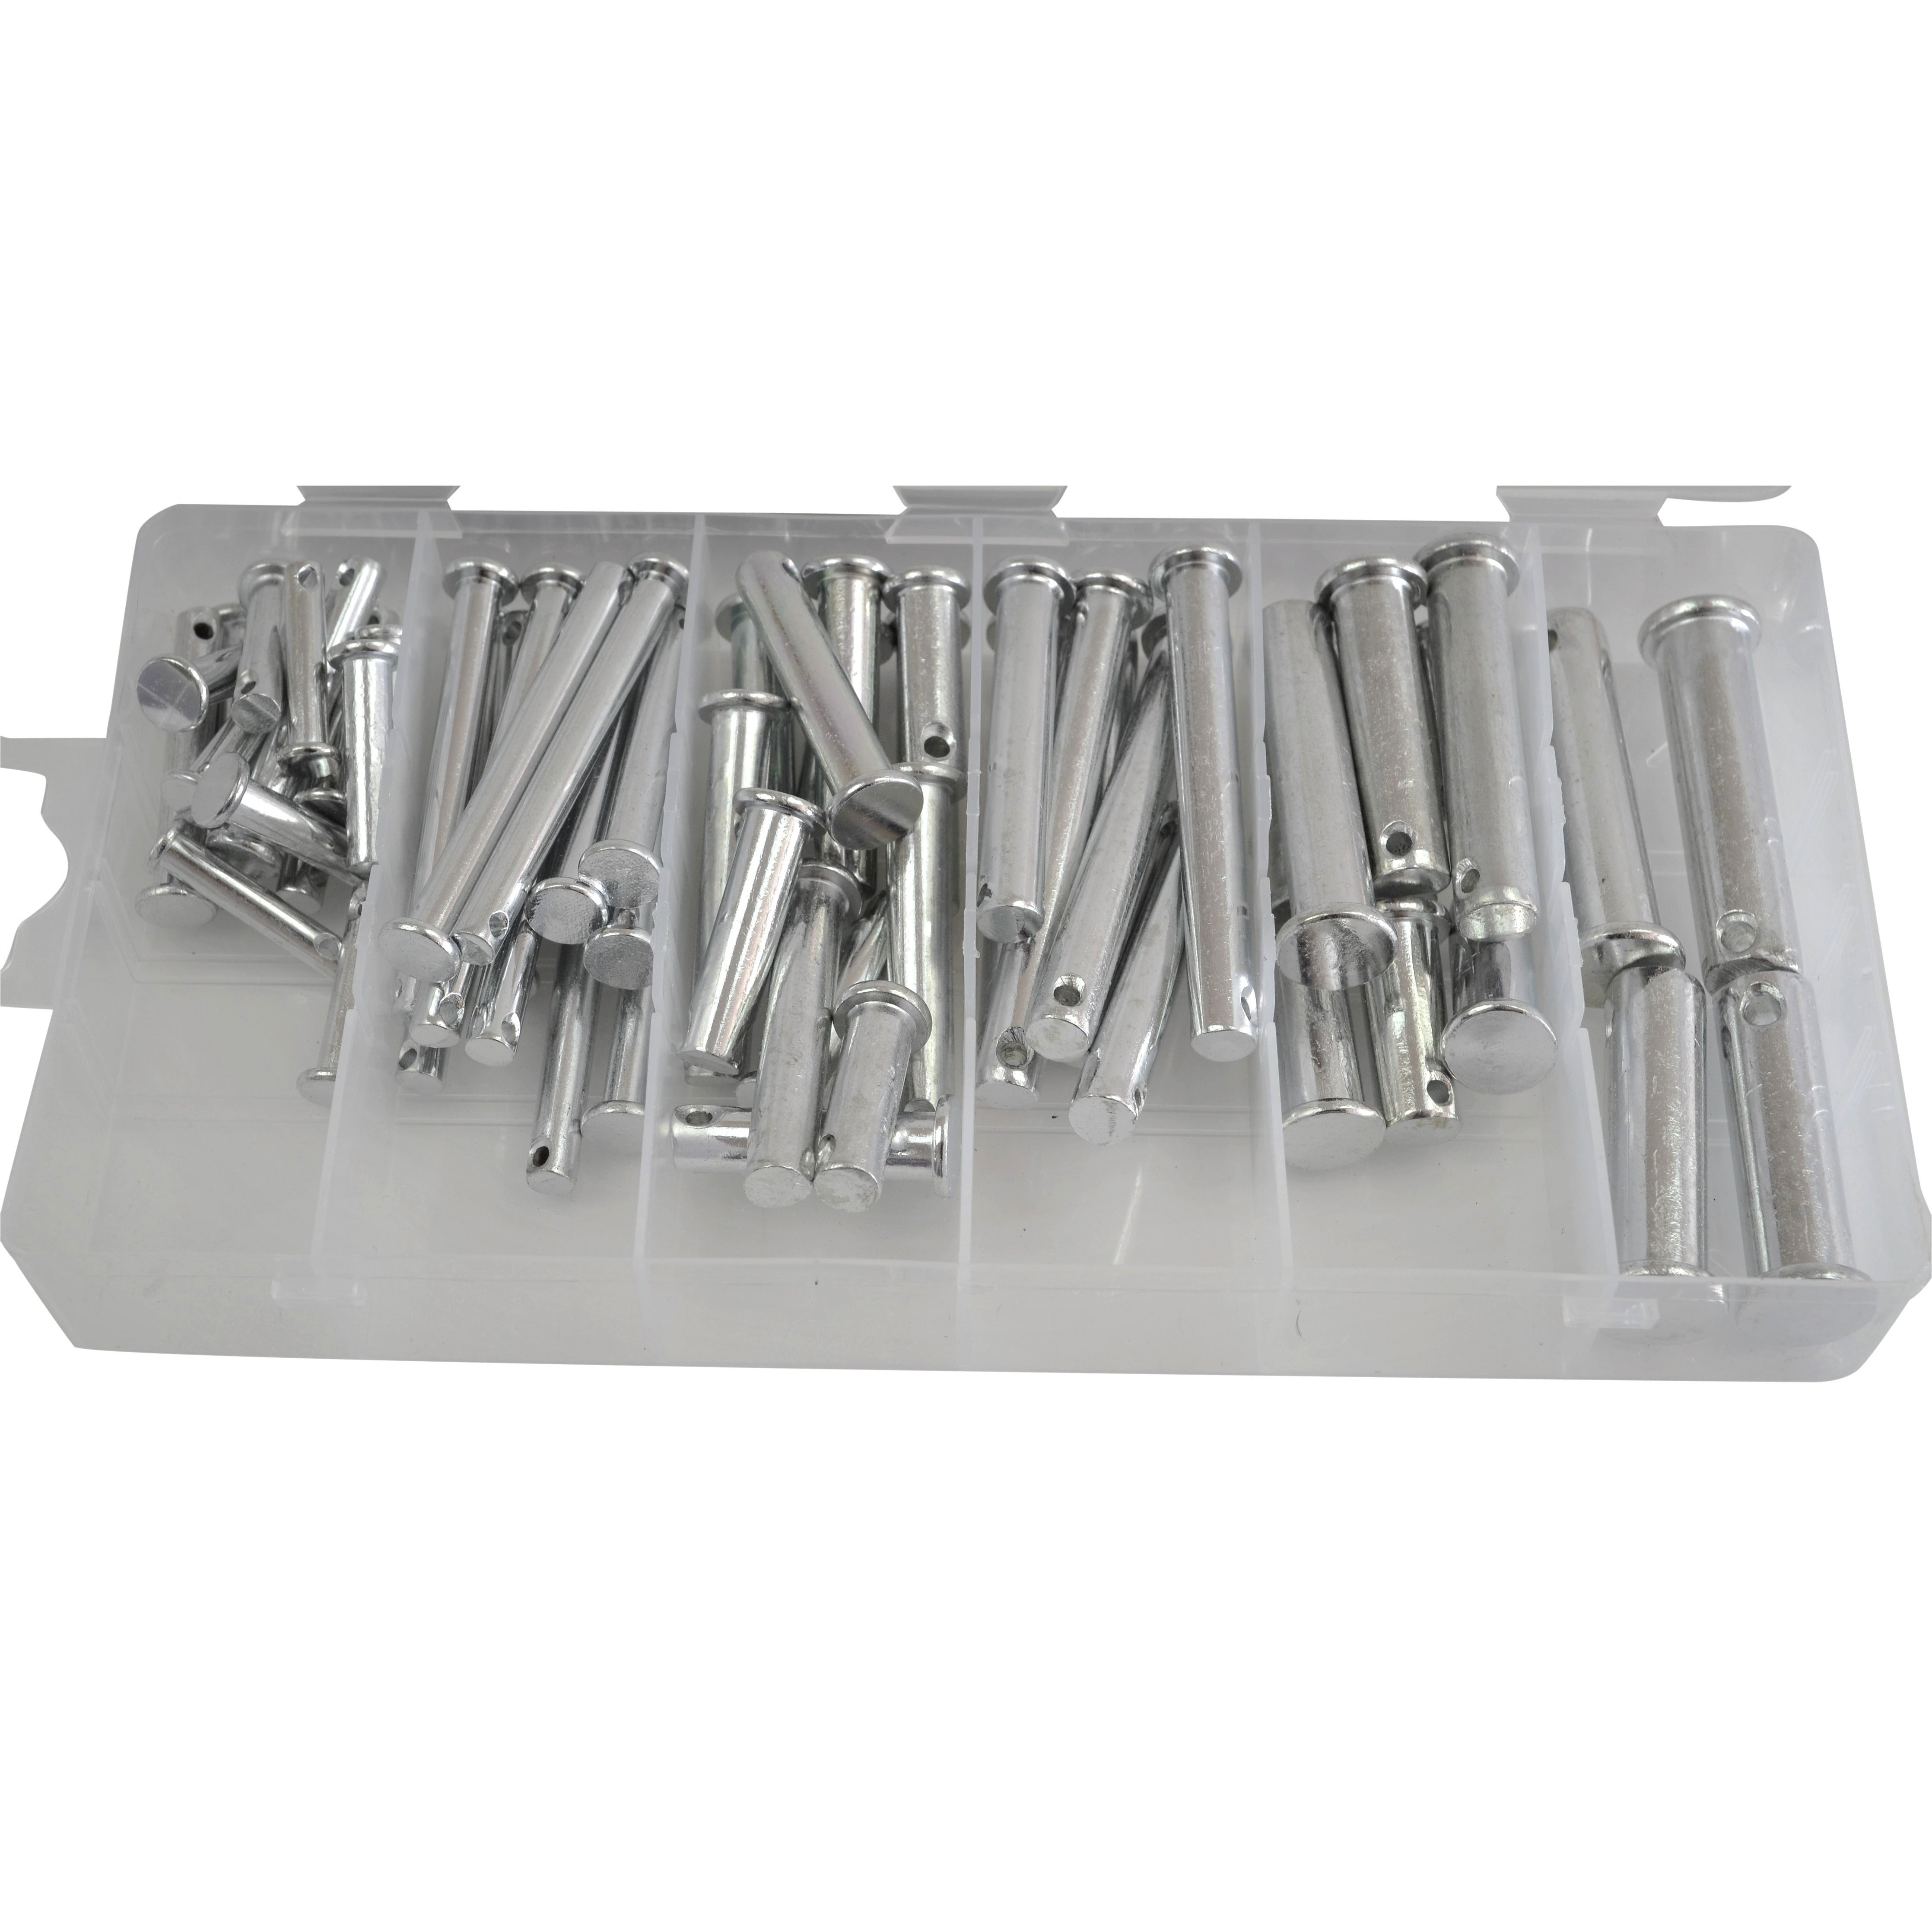 60 Pc Metric Clevis Pin Hitch Pin Grab Kit Assortment  M8 - M12